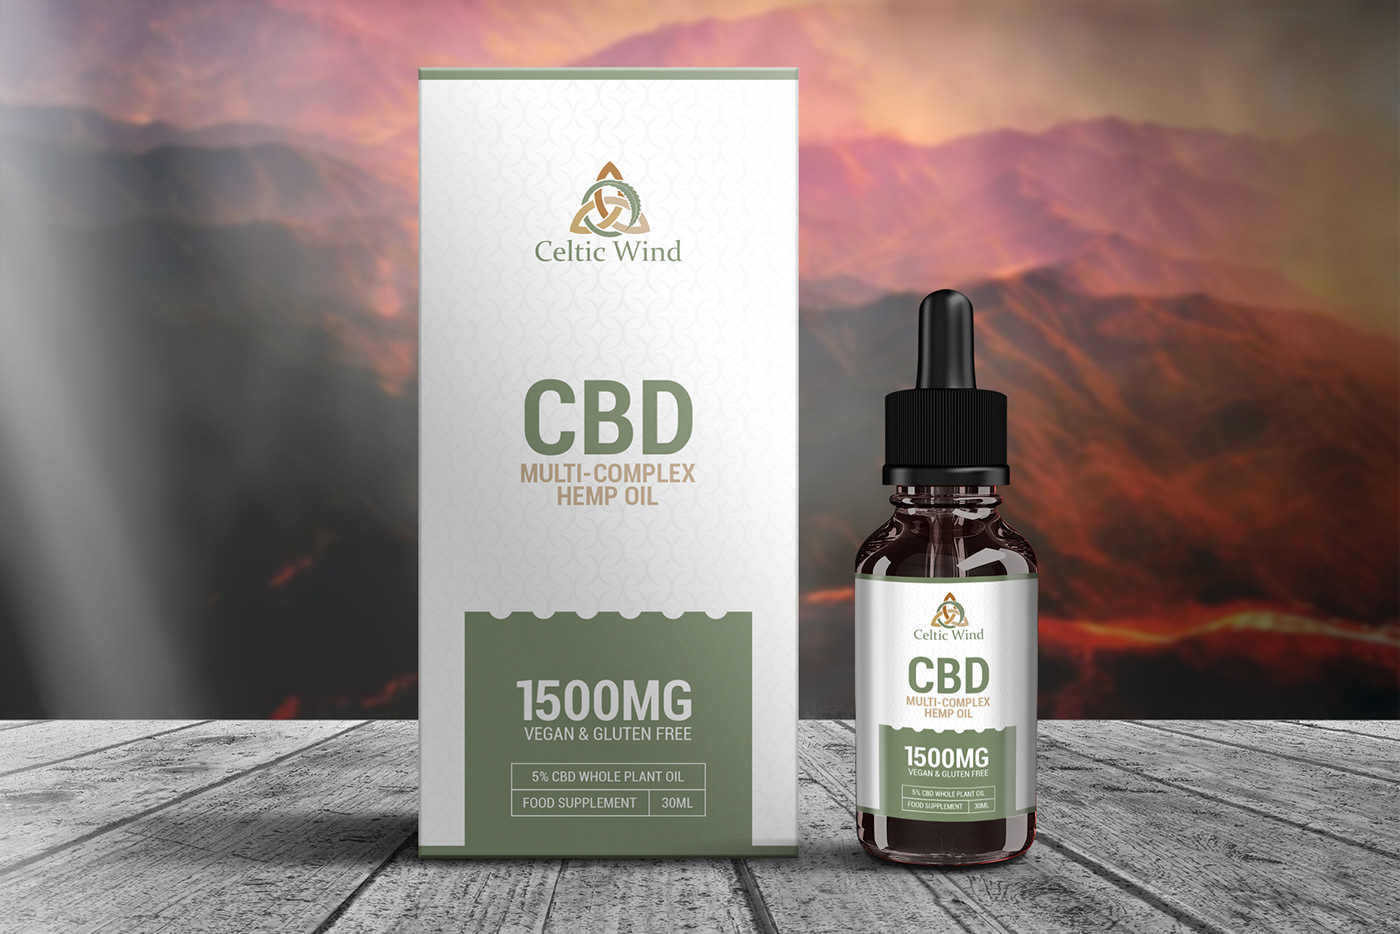 cannabisculture cannabiscures CBD cbdoil hemp Illustrator label design Medicinal packaging design thc